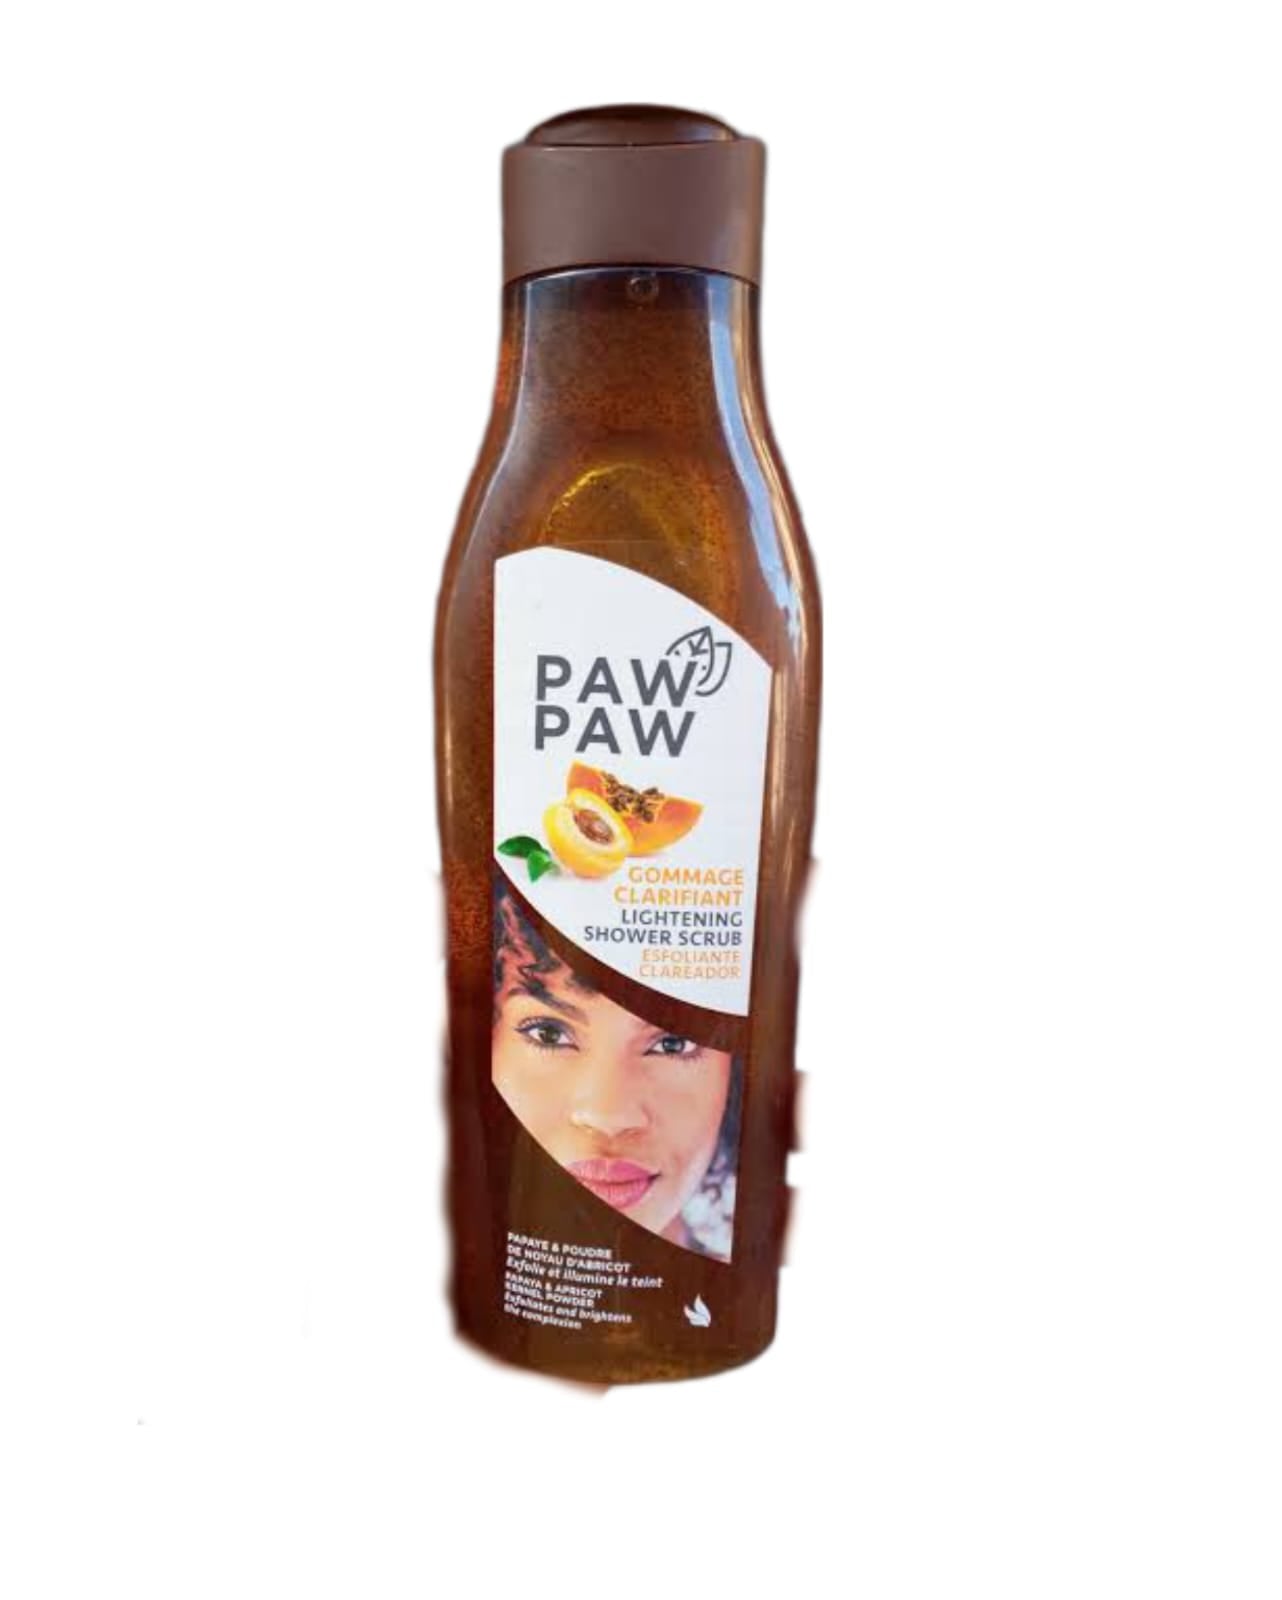 Paw Paw Lightening Shower Scrub